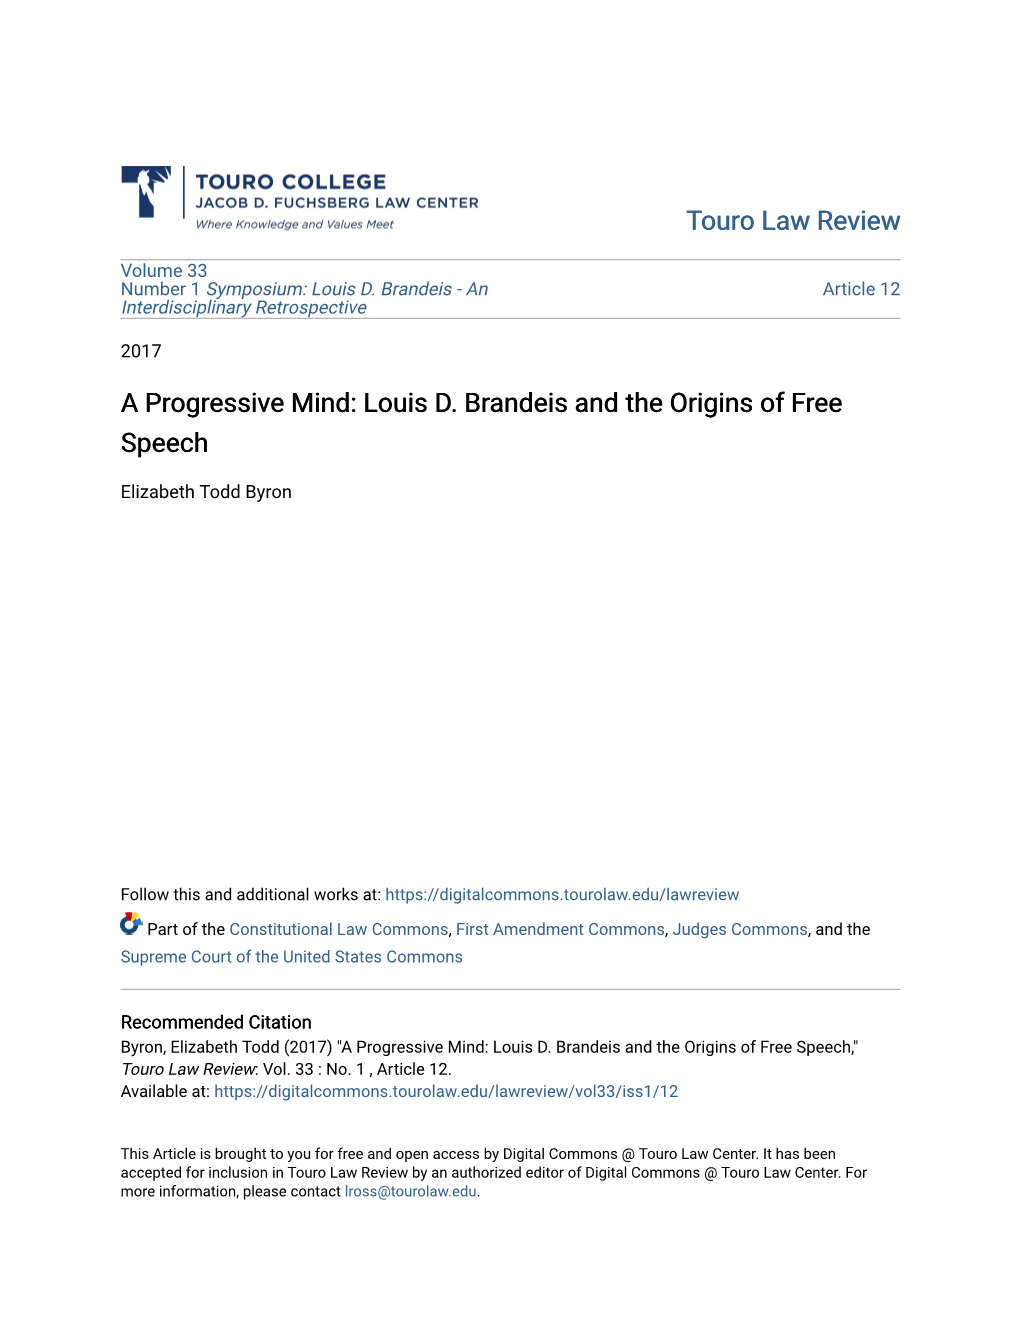 A Progressive Mind: Louis D. Brandeis and the Origins of Free Speech